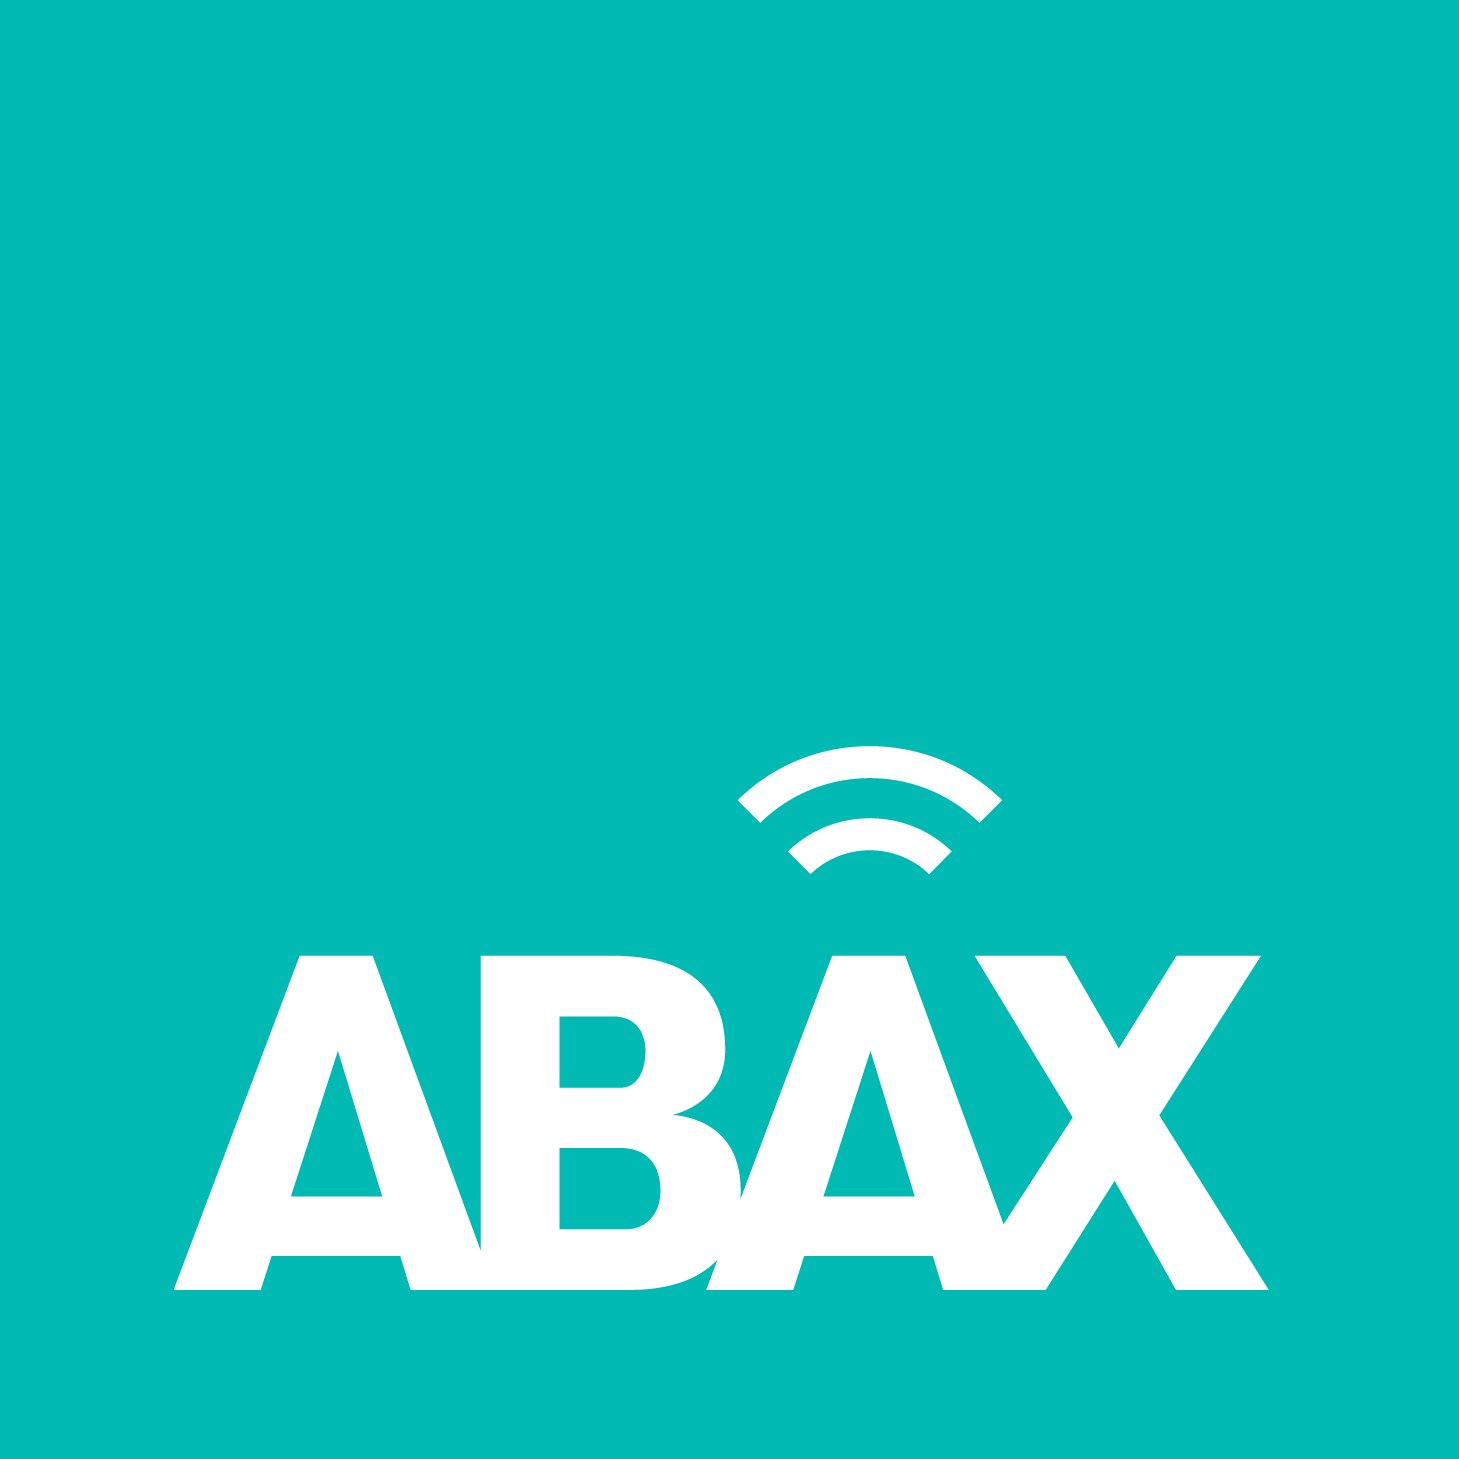 ABAX 2397 cmyk logo.jpg